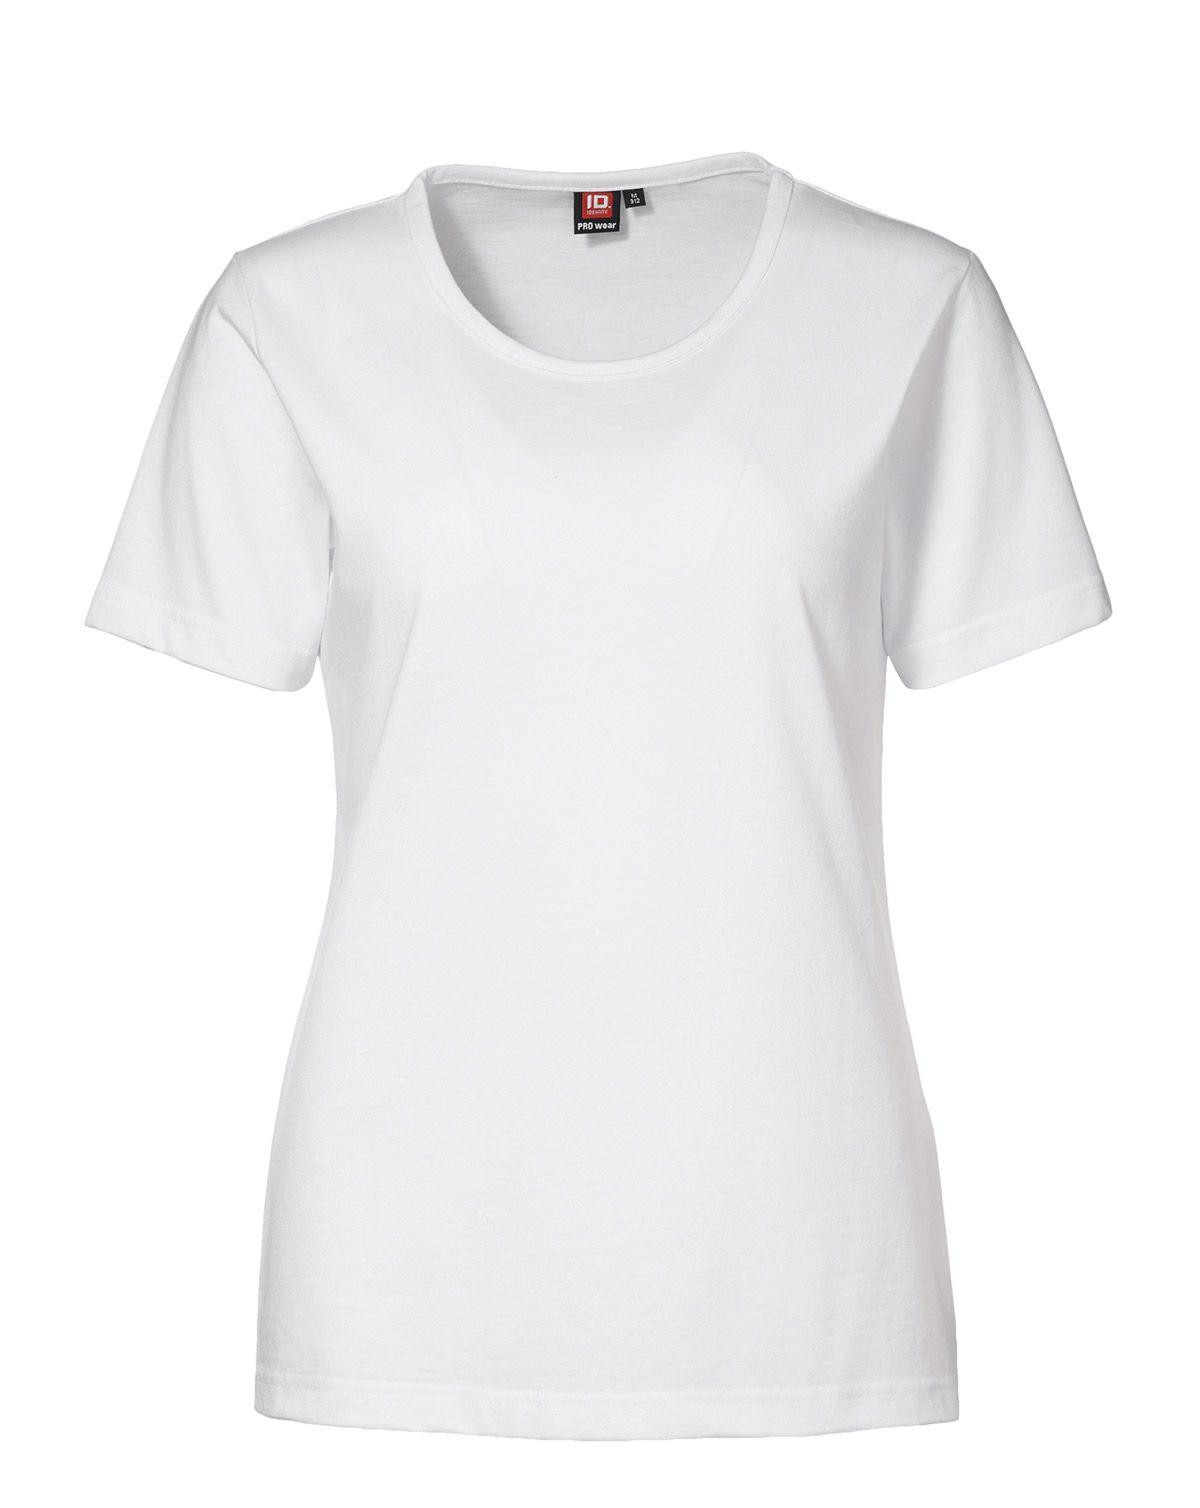 ID PRO T-shirt (Hvid, 4XL)